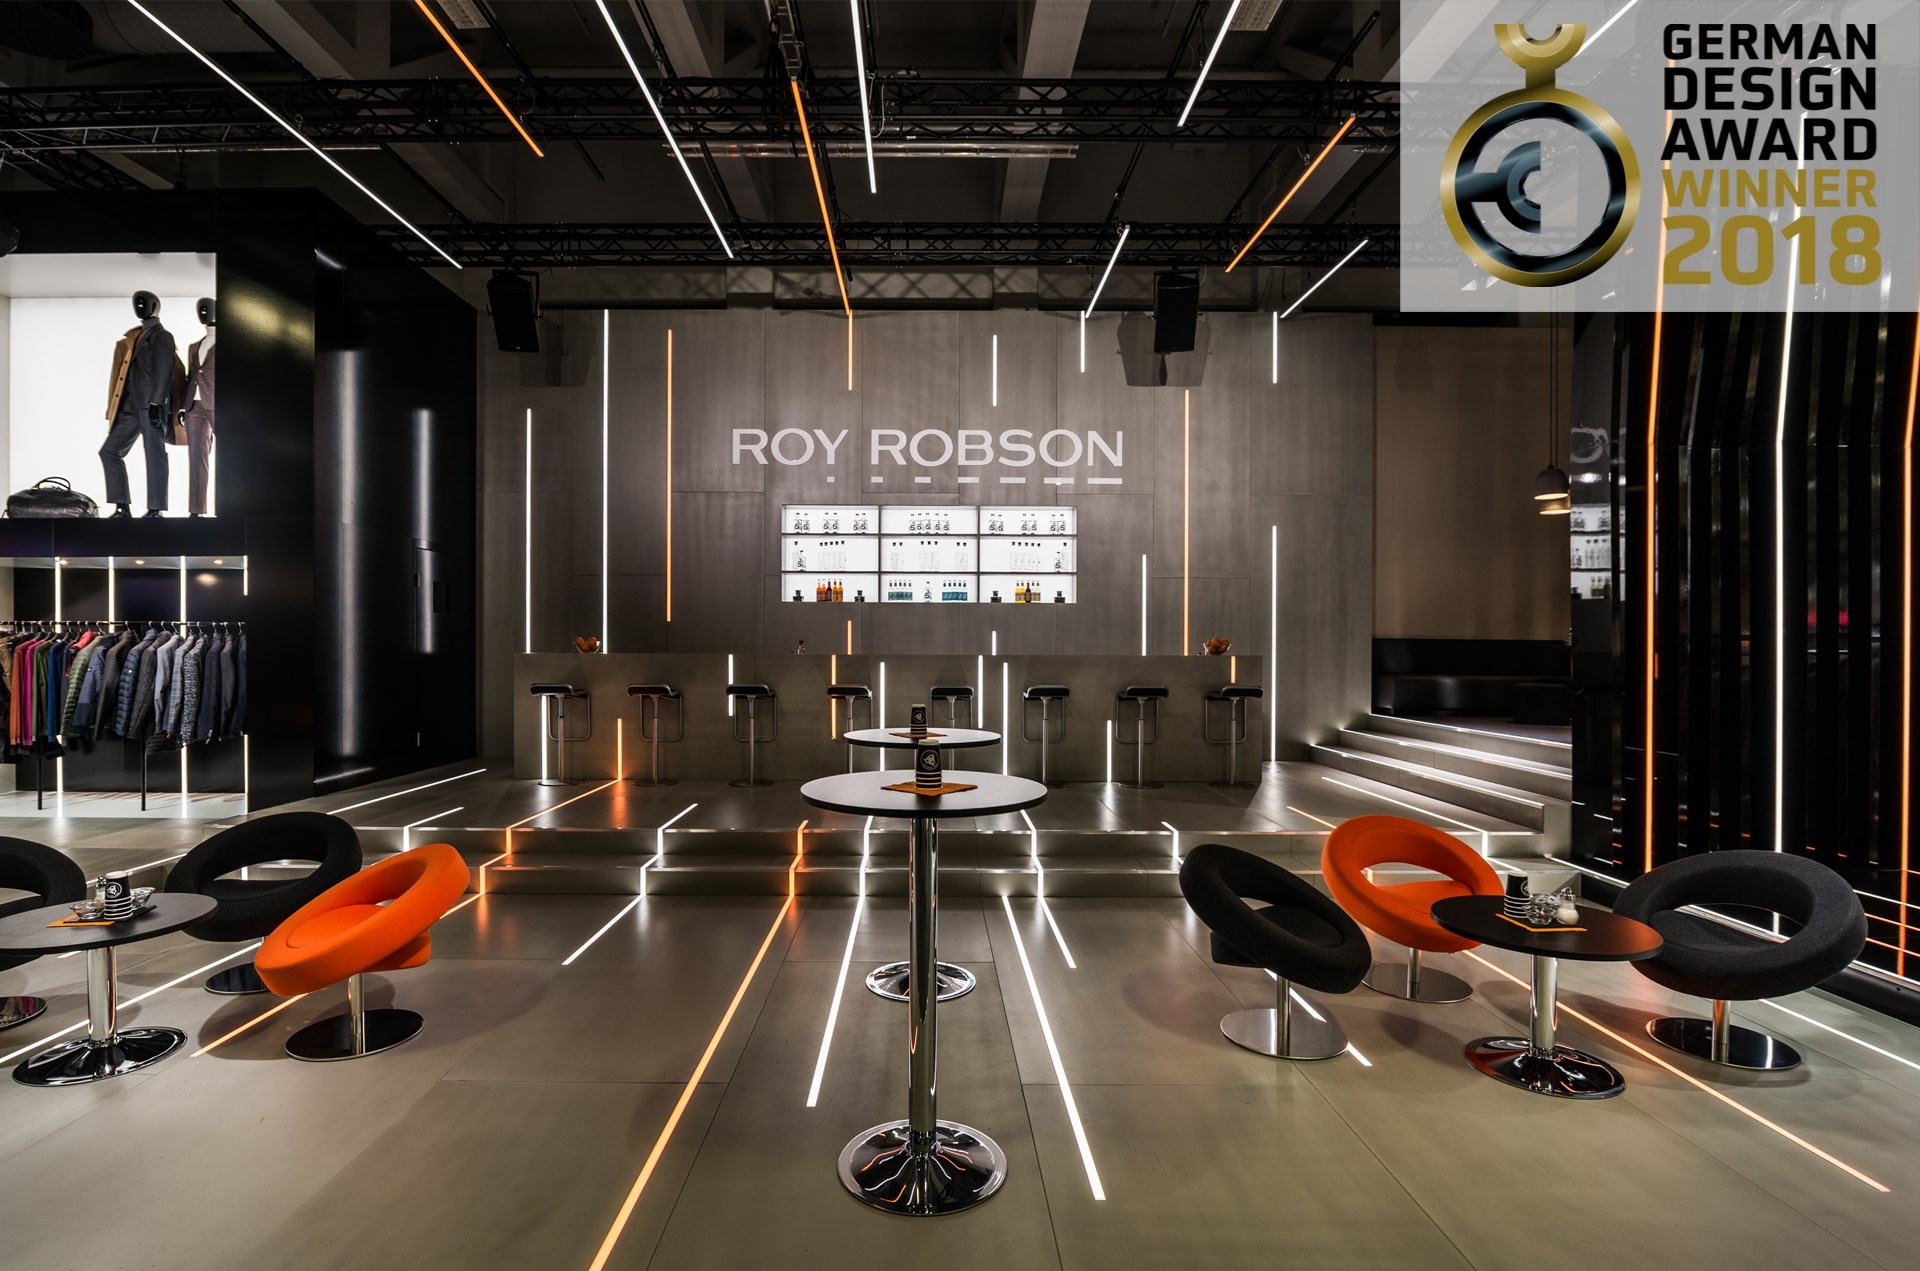 ROY ROBSON / PANORAMA  German Design Award Winner 2018